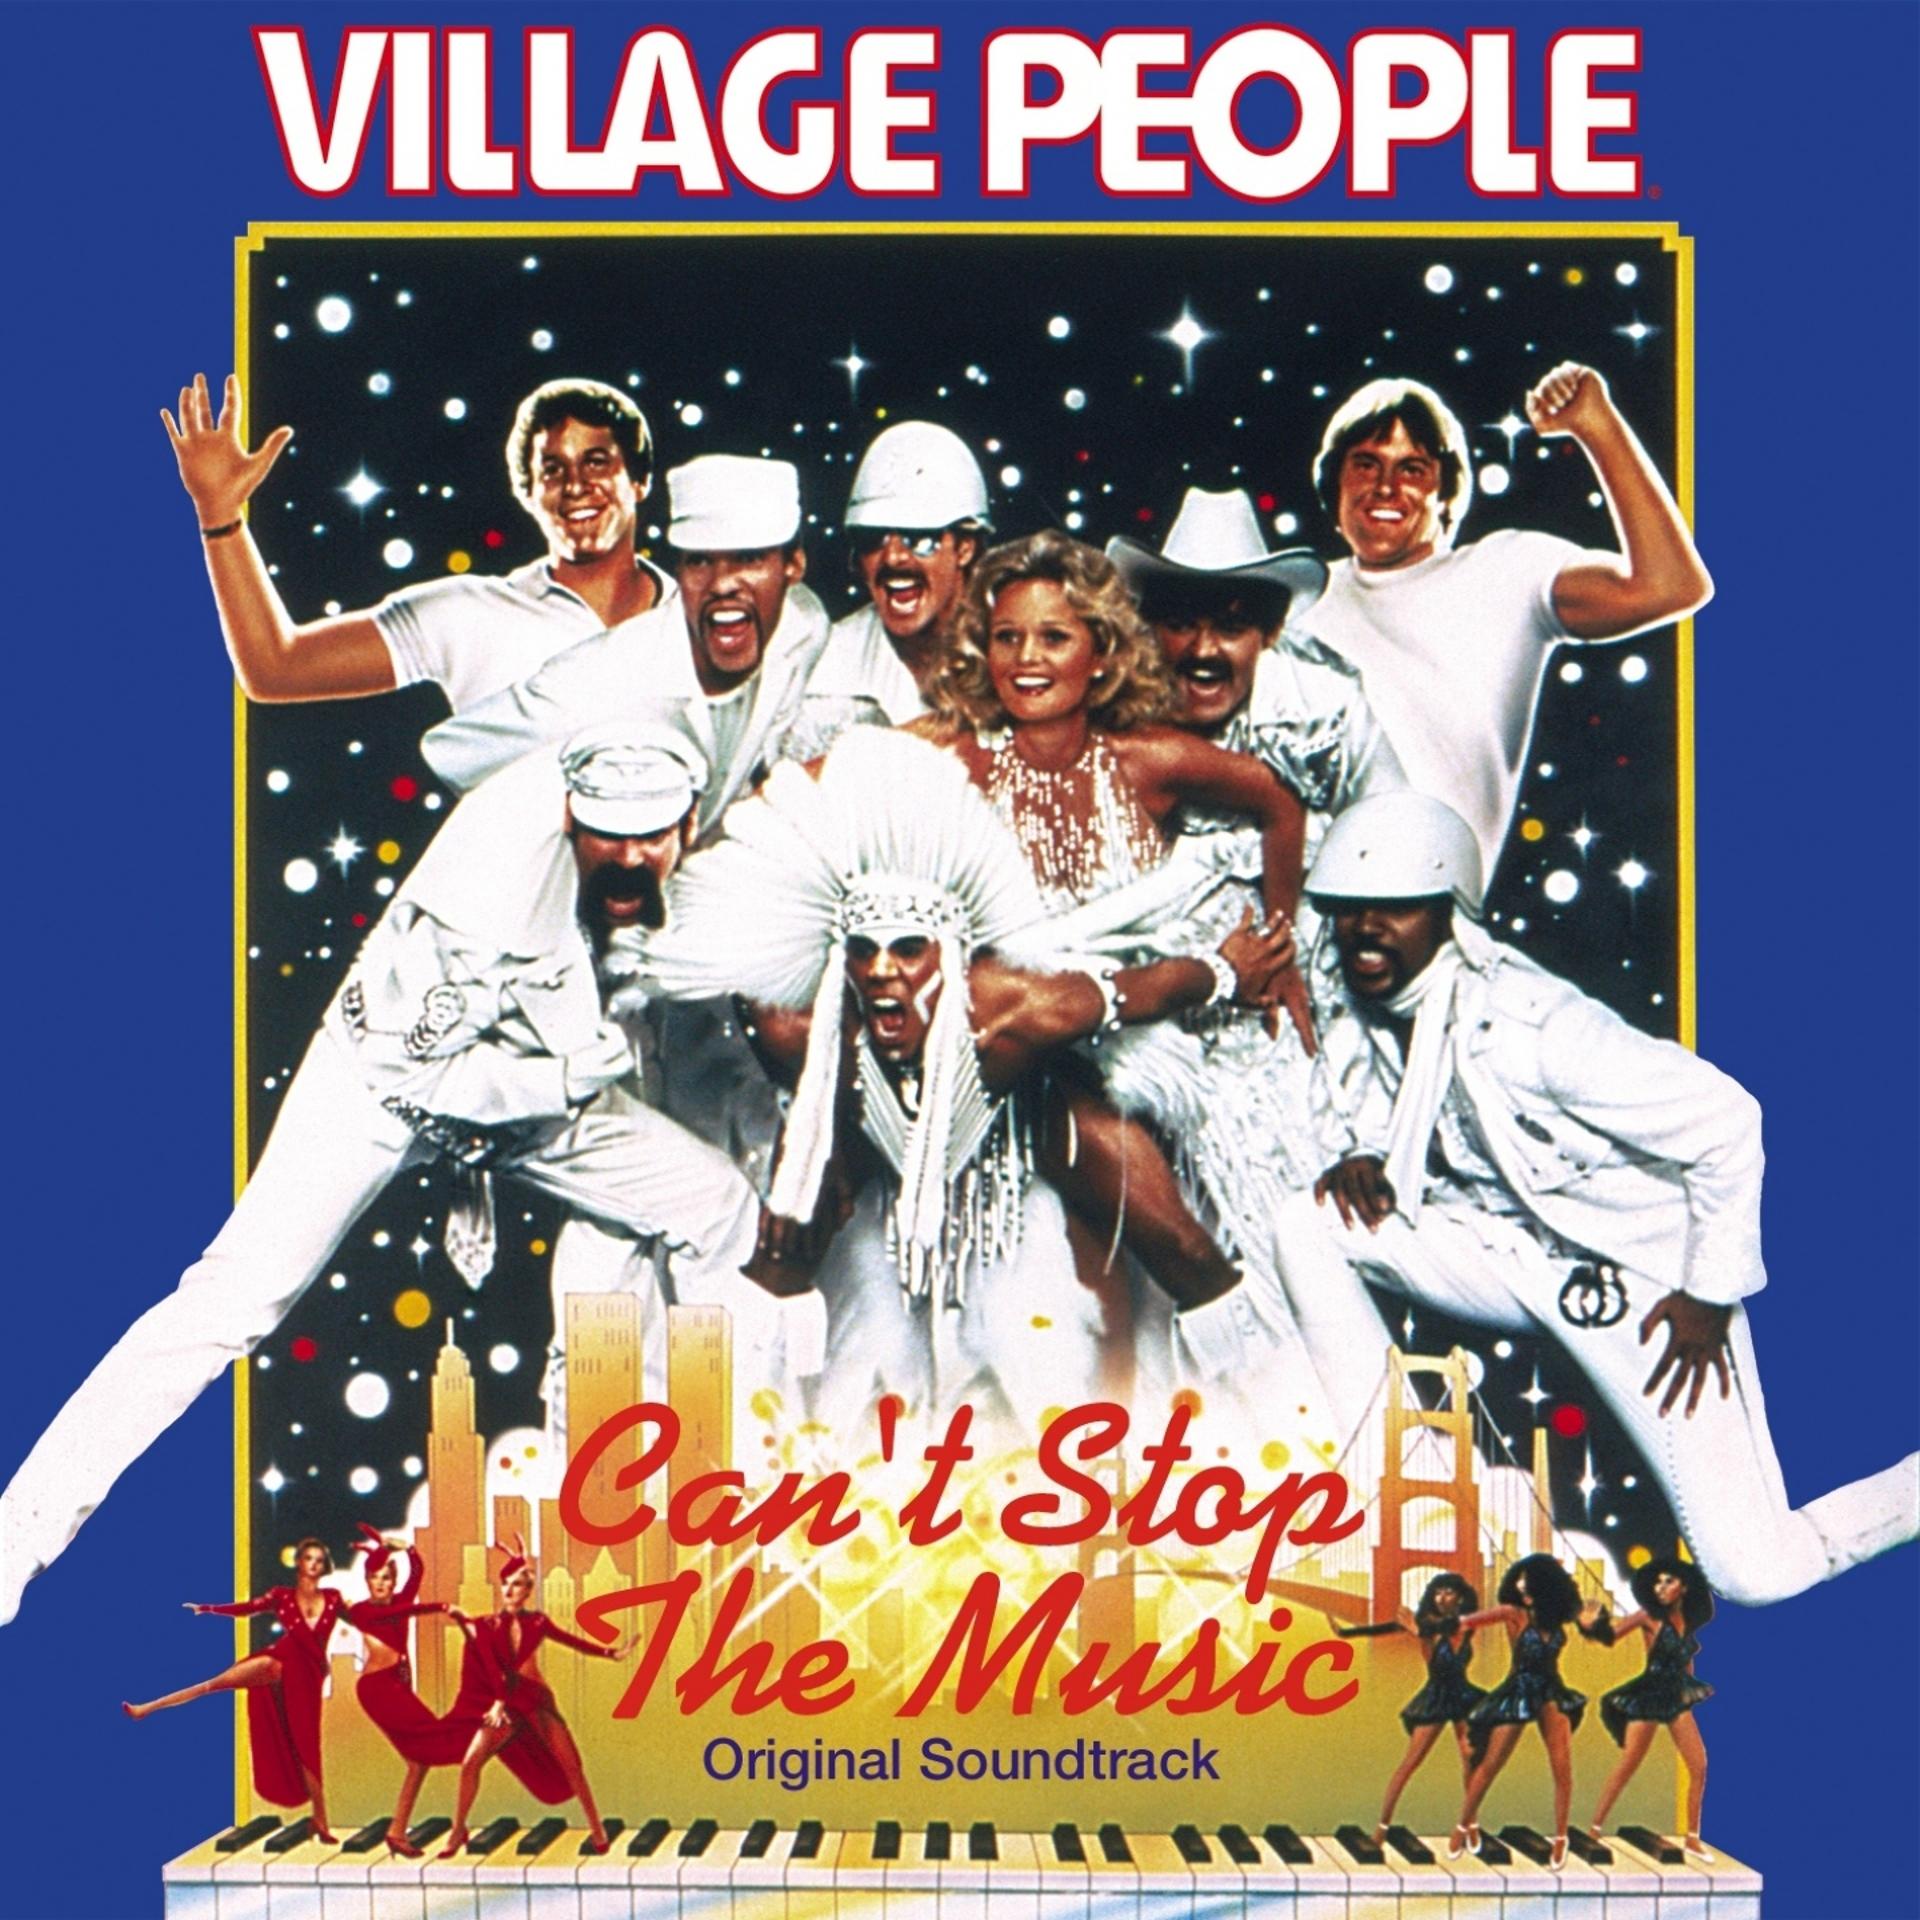 Music village. Village people 1980. Village people 1980 cant stop the Music. Группа Village people альбомы. Мьюзик пипл.